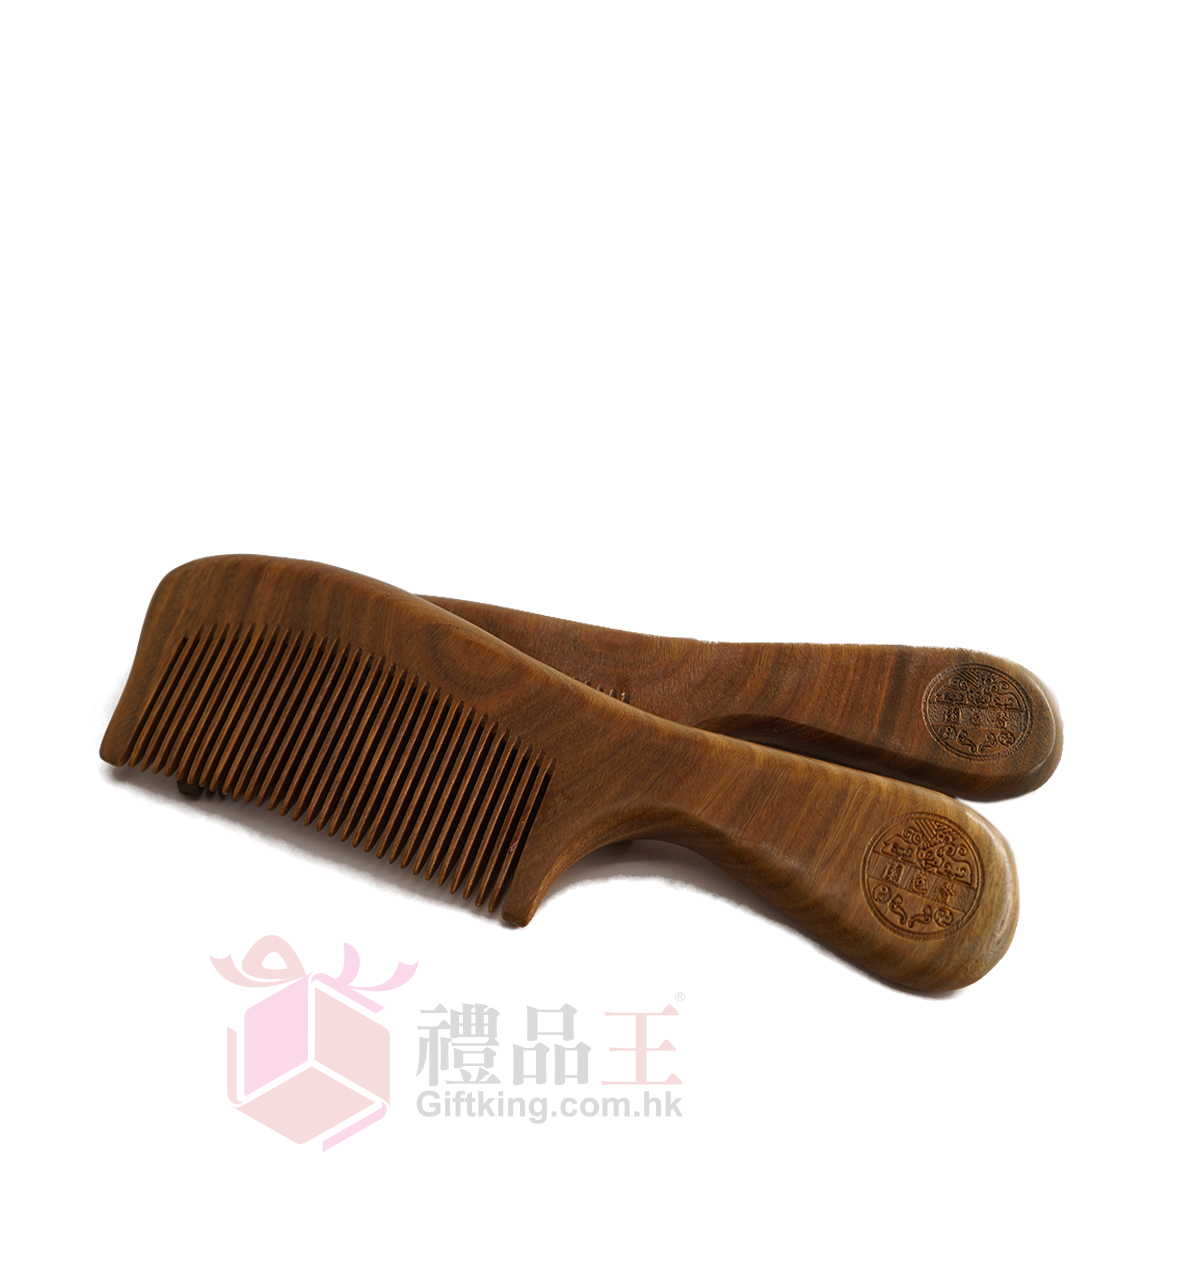 Sik Sik Yuen Wooden Comb (Homeware Gift)